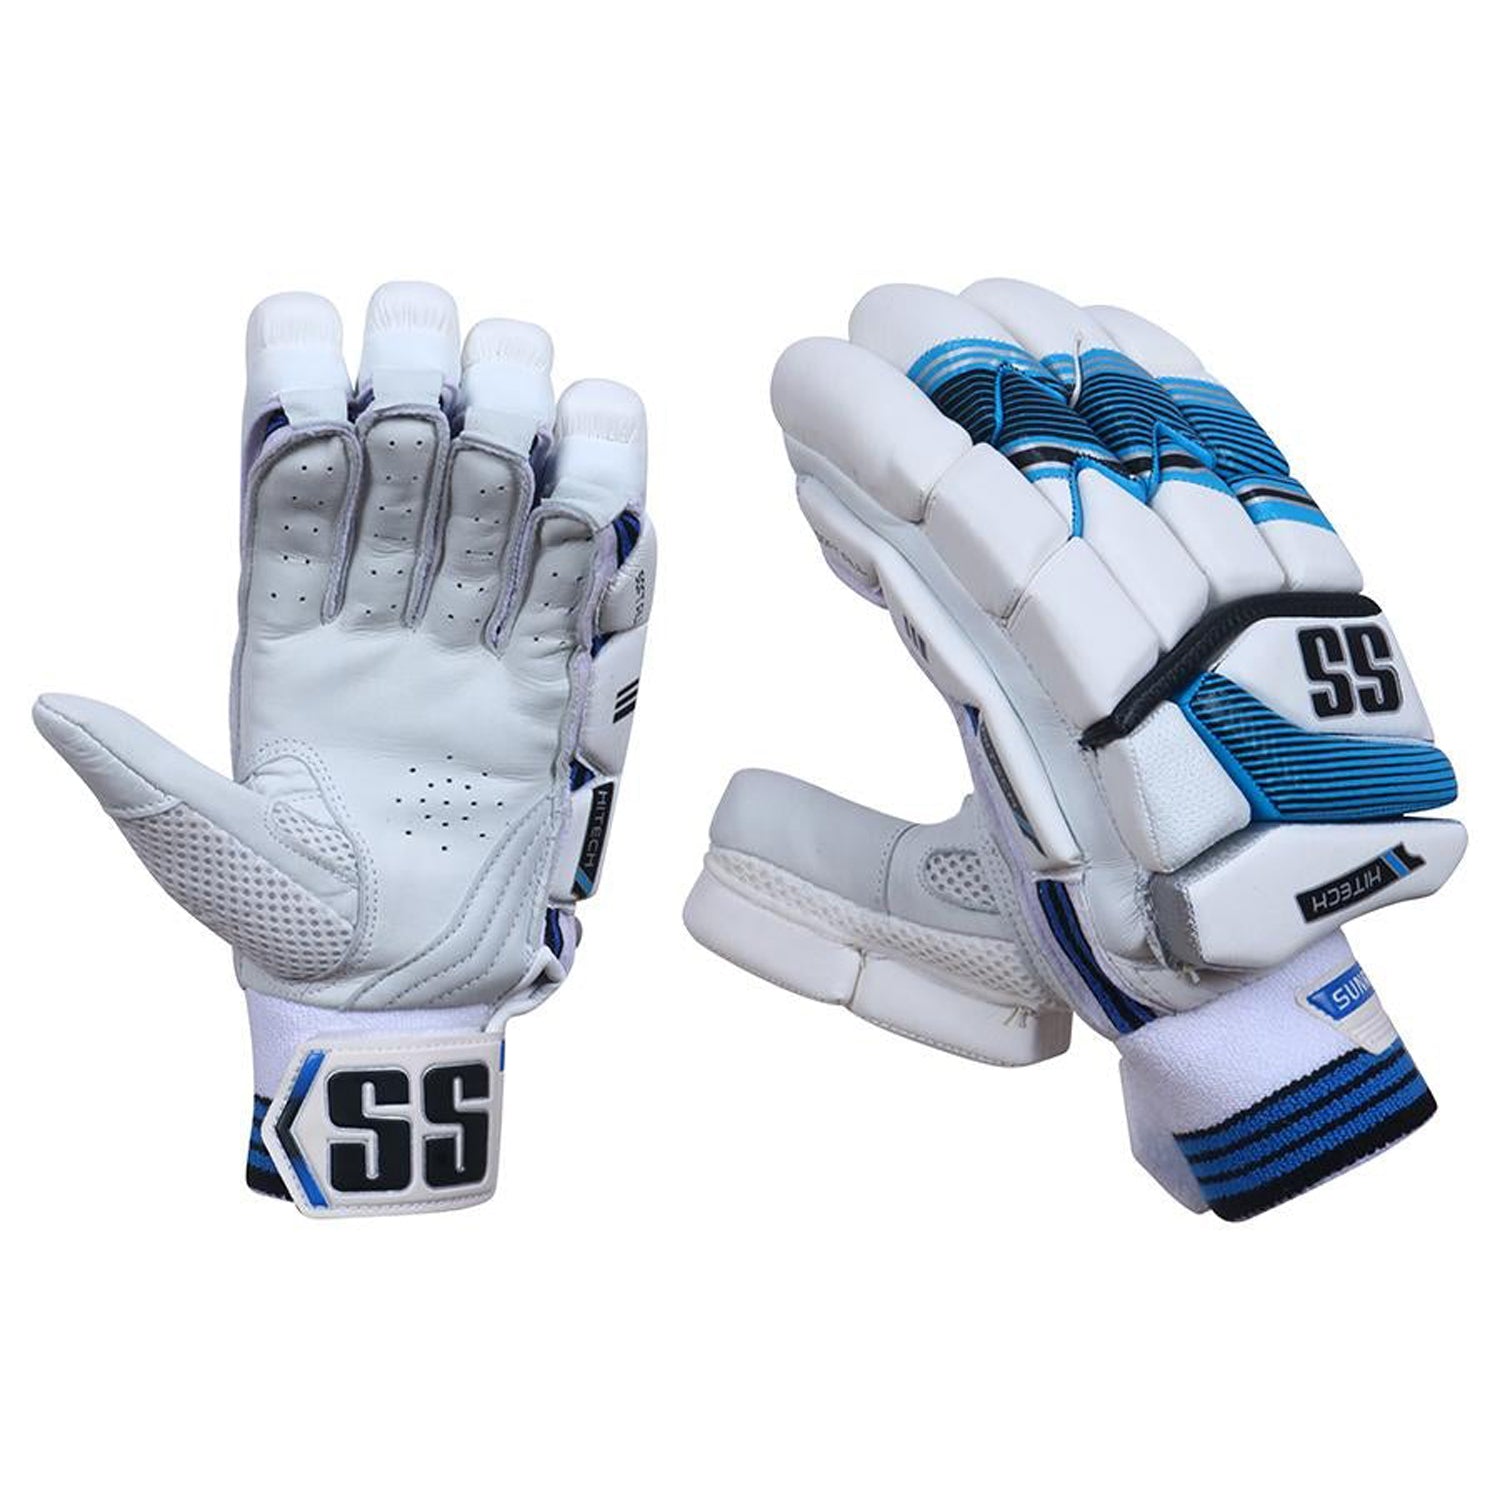 SS Hi-Tech RH Batting Gloves , White/Blue - Best Price online Prokicksports.com